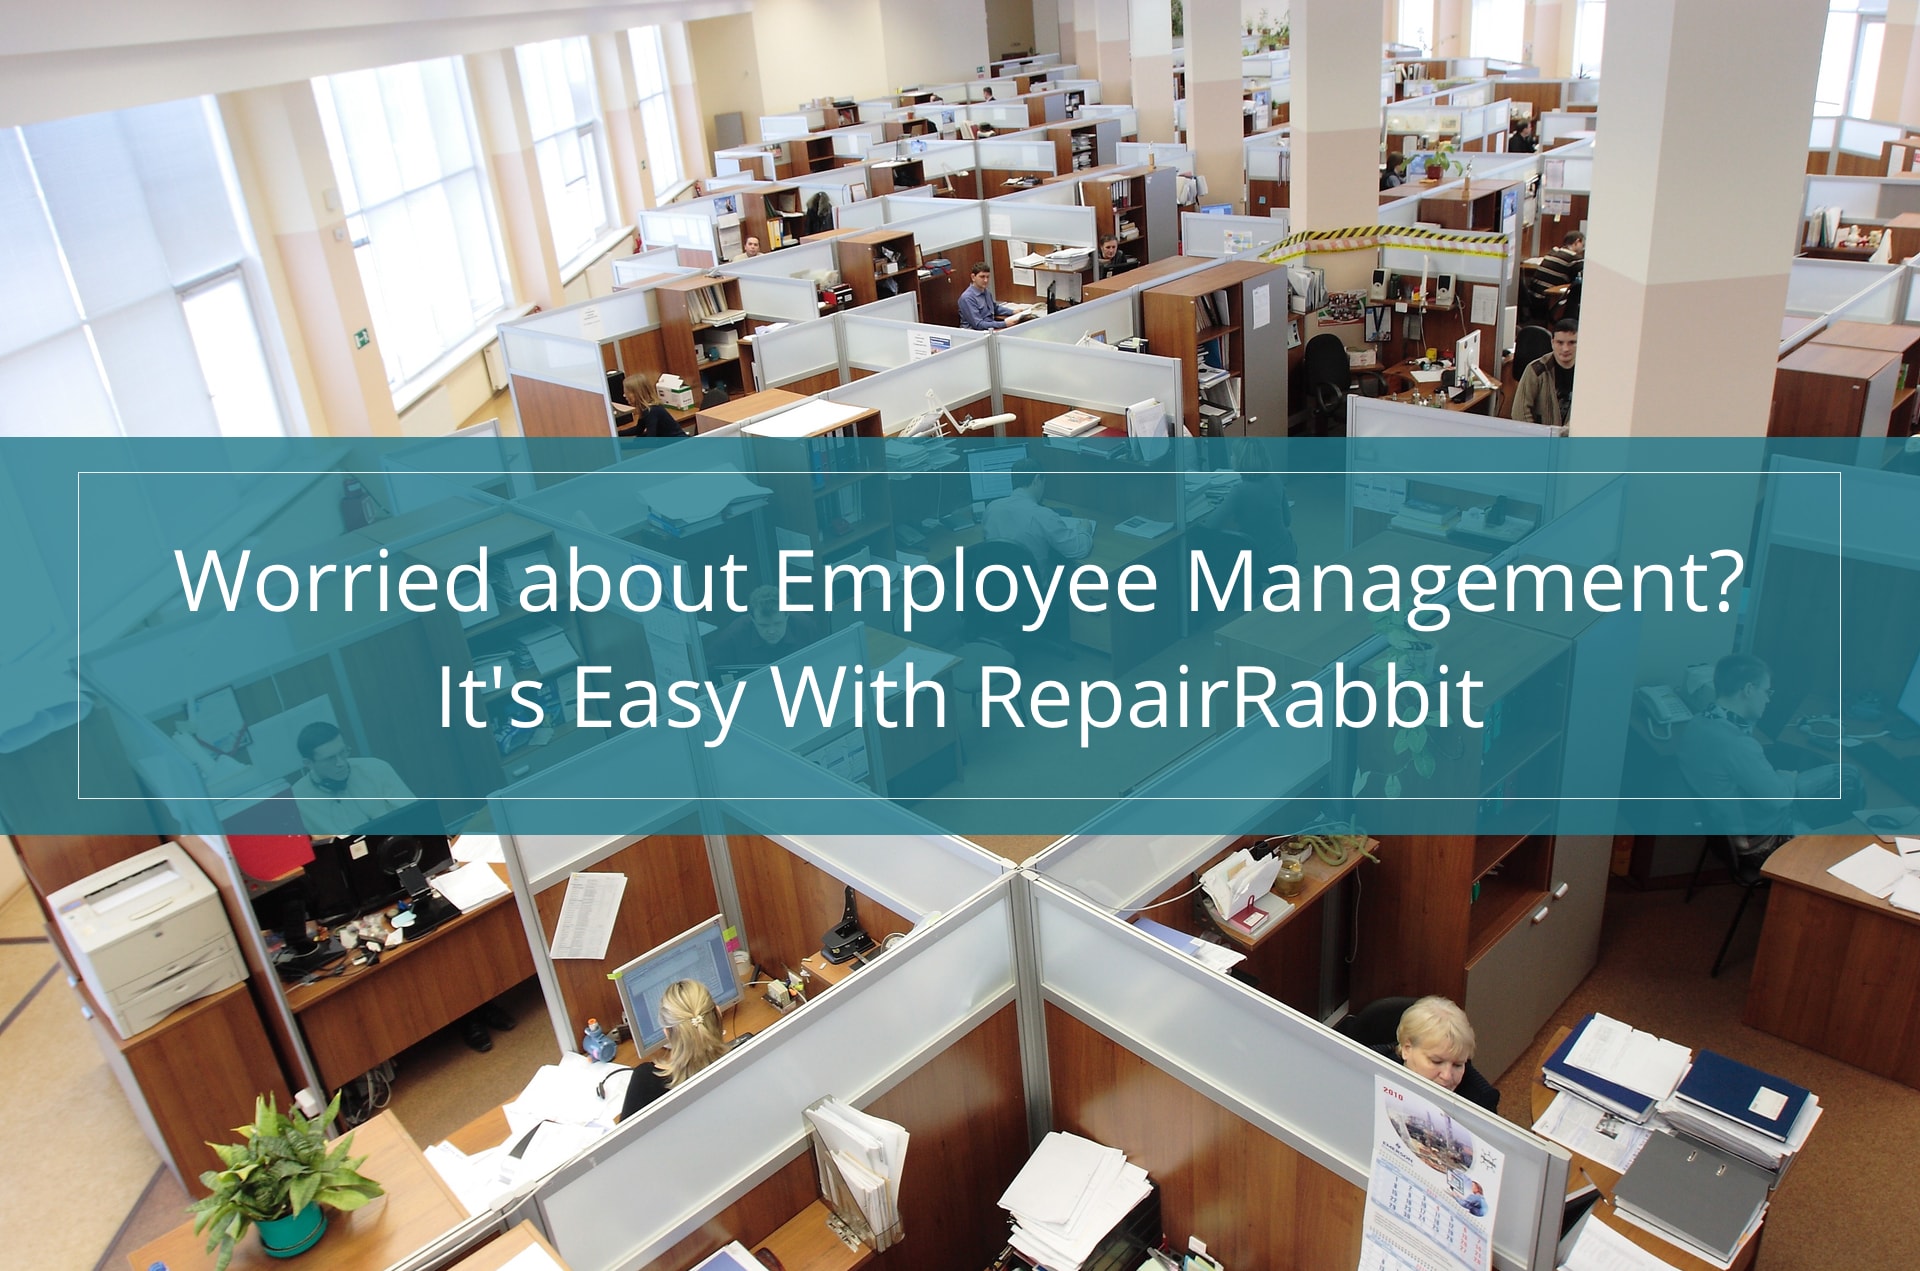 Easy employee management